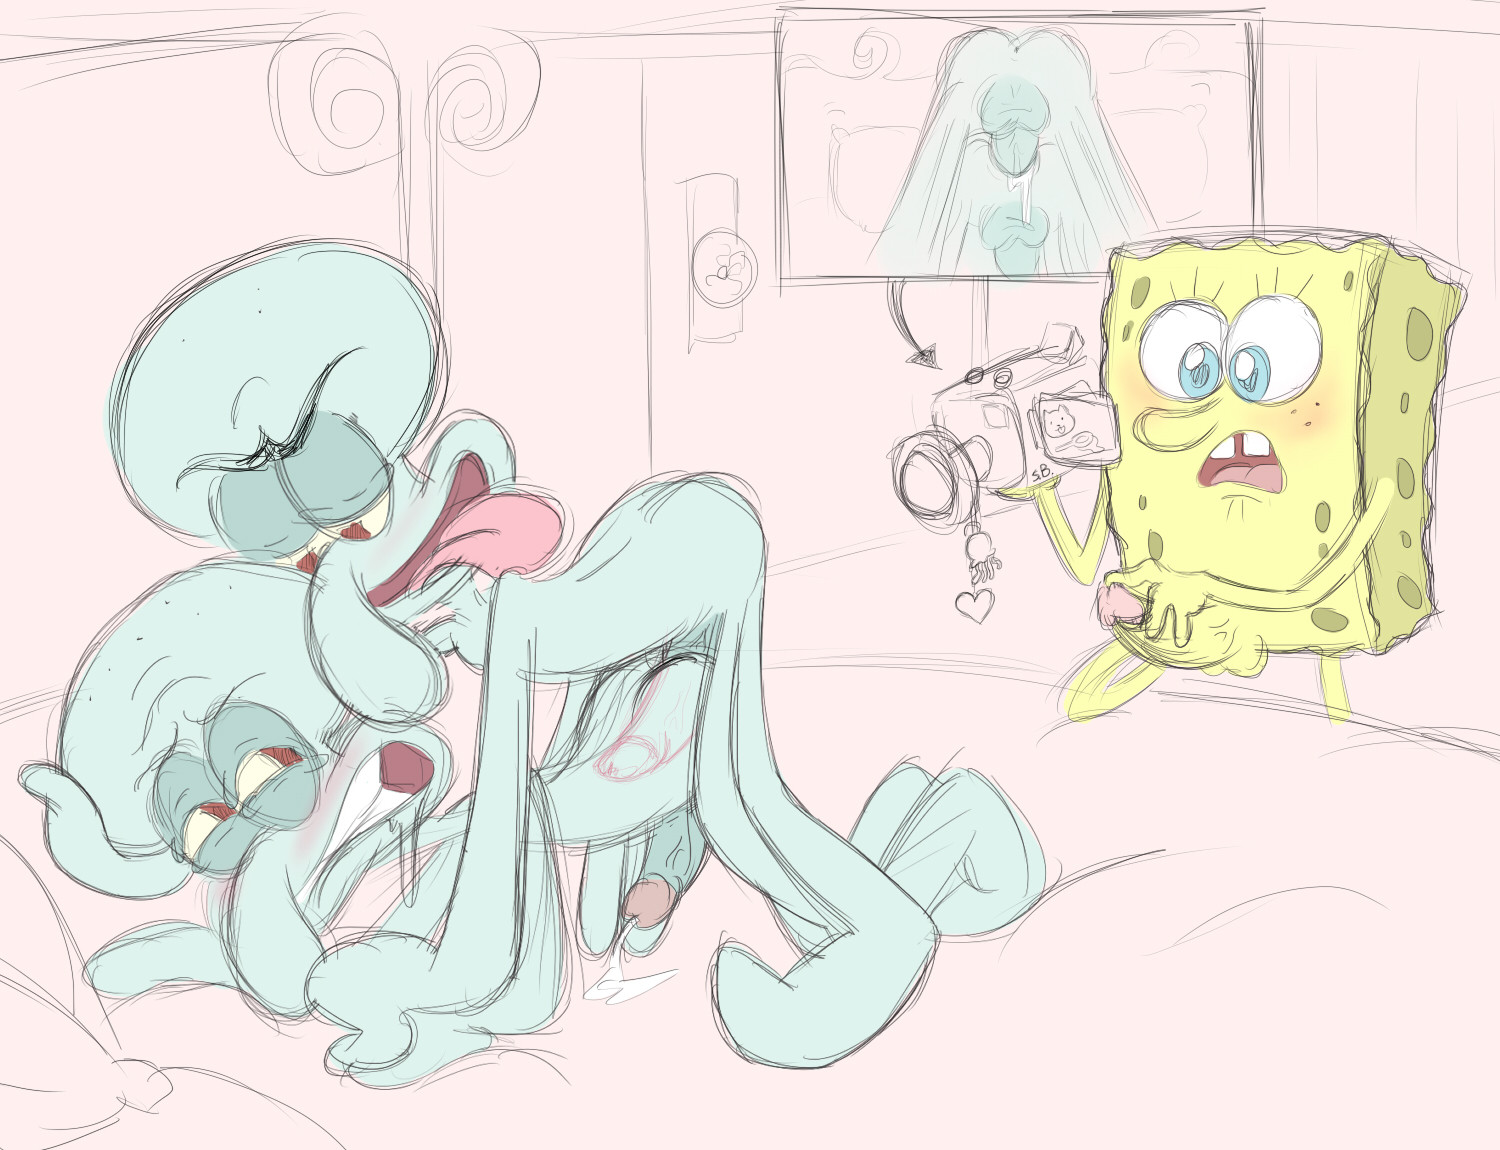 Ghetto Spongebob Pornhub - spongebob gay spongebob gay porn spongebob and plankton gay porn squidward  tentacle porn gay - XXXPicz